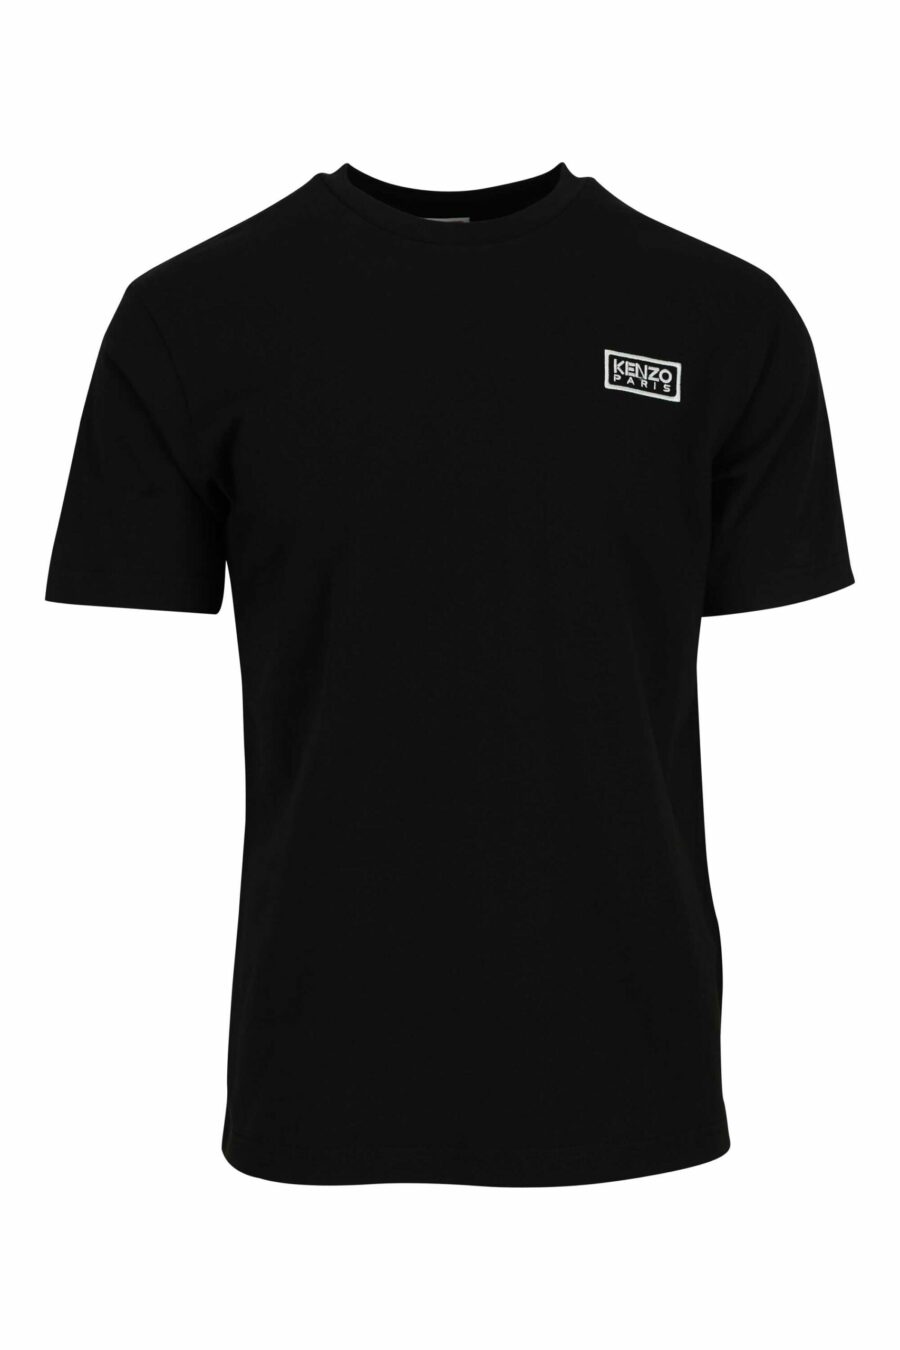 Camiseta negra con minilogo "KP classic" - 3612230624443 scaled